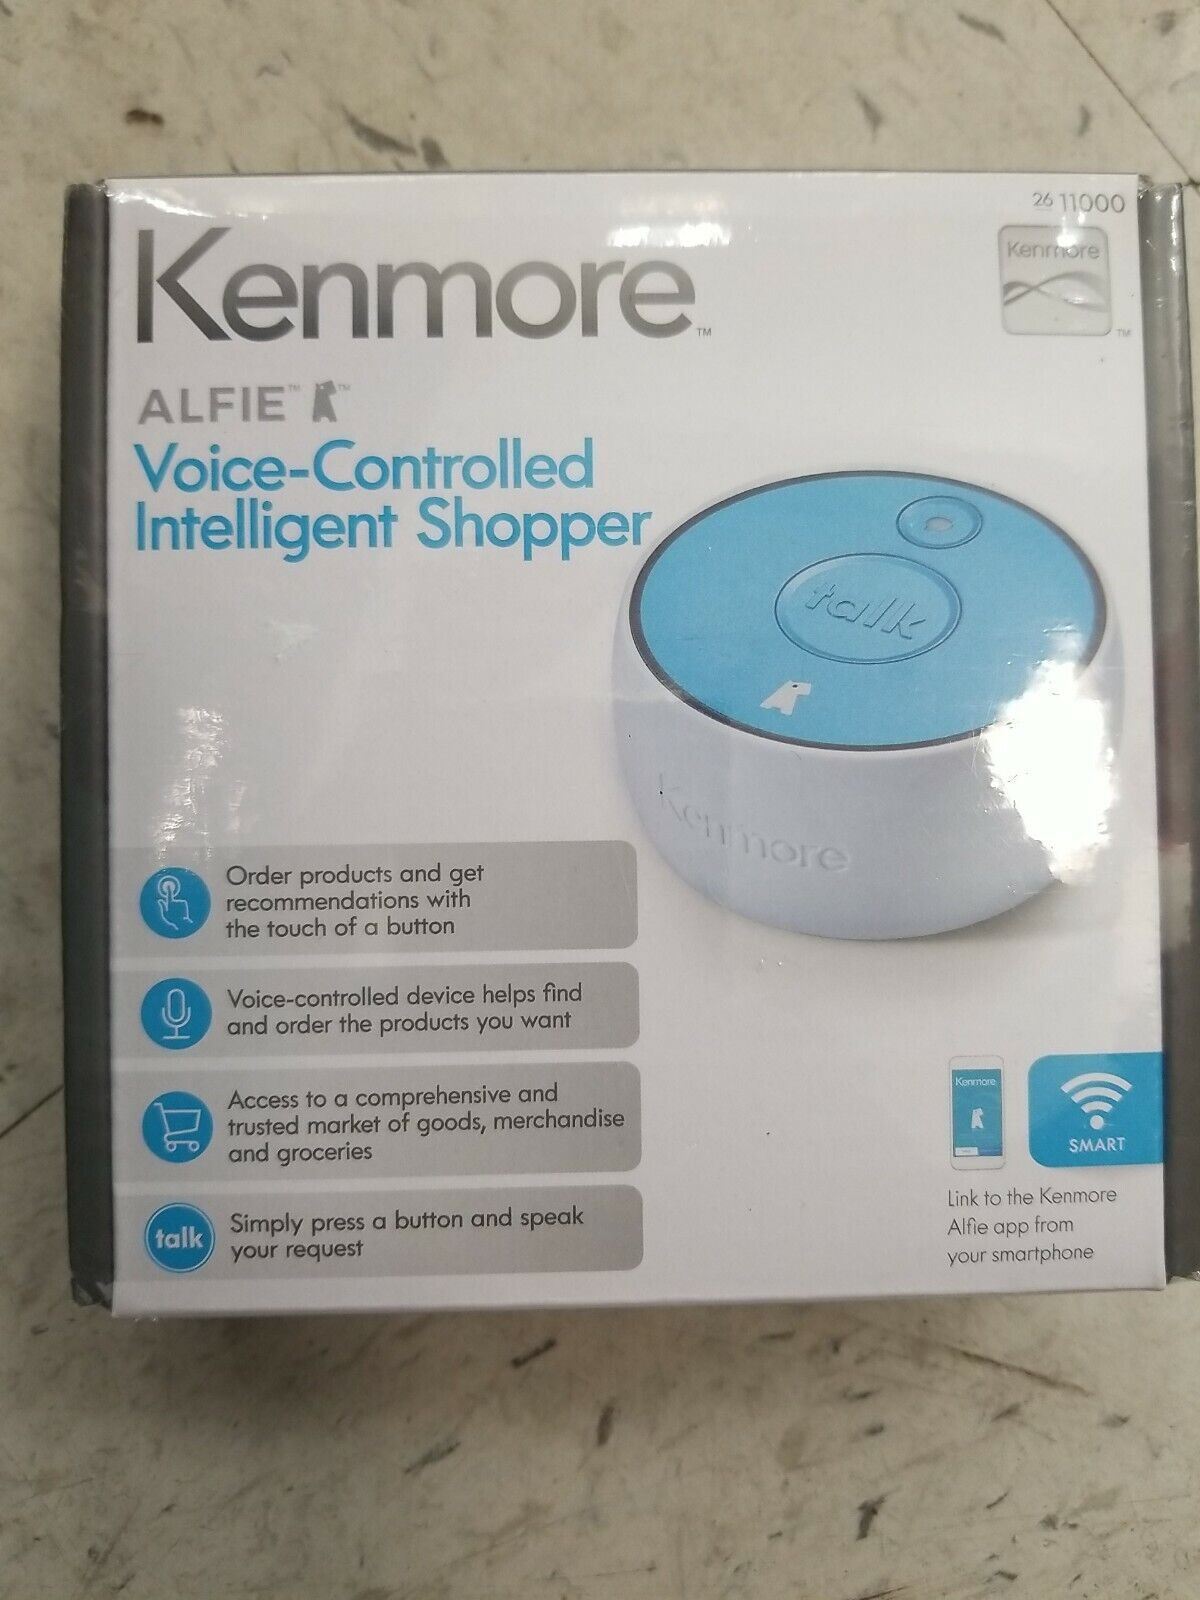 Brand New Kenmore Alfie Voice-controlled Intelligent Shopper 11000 Nib